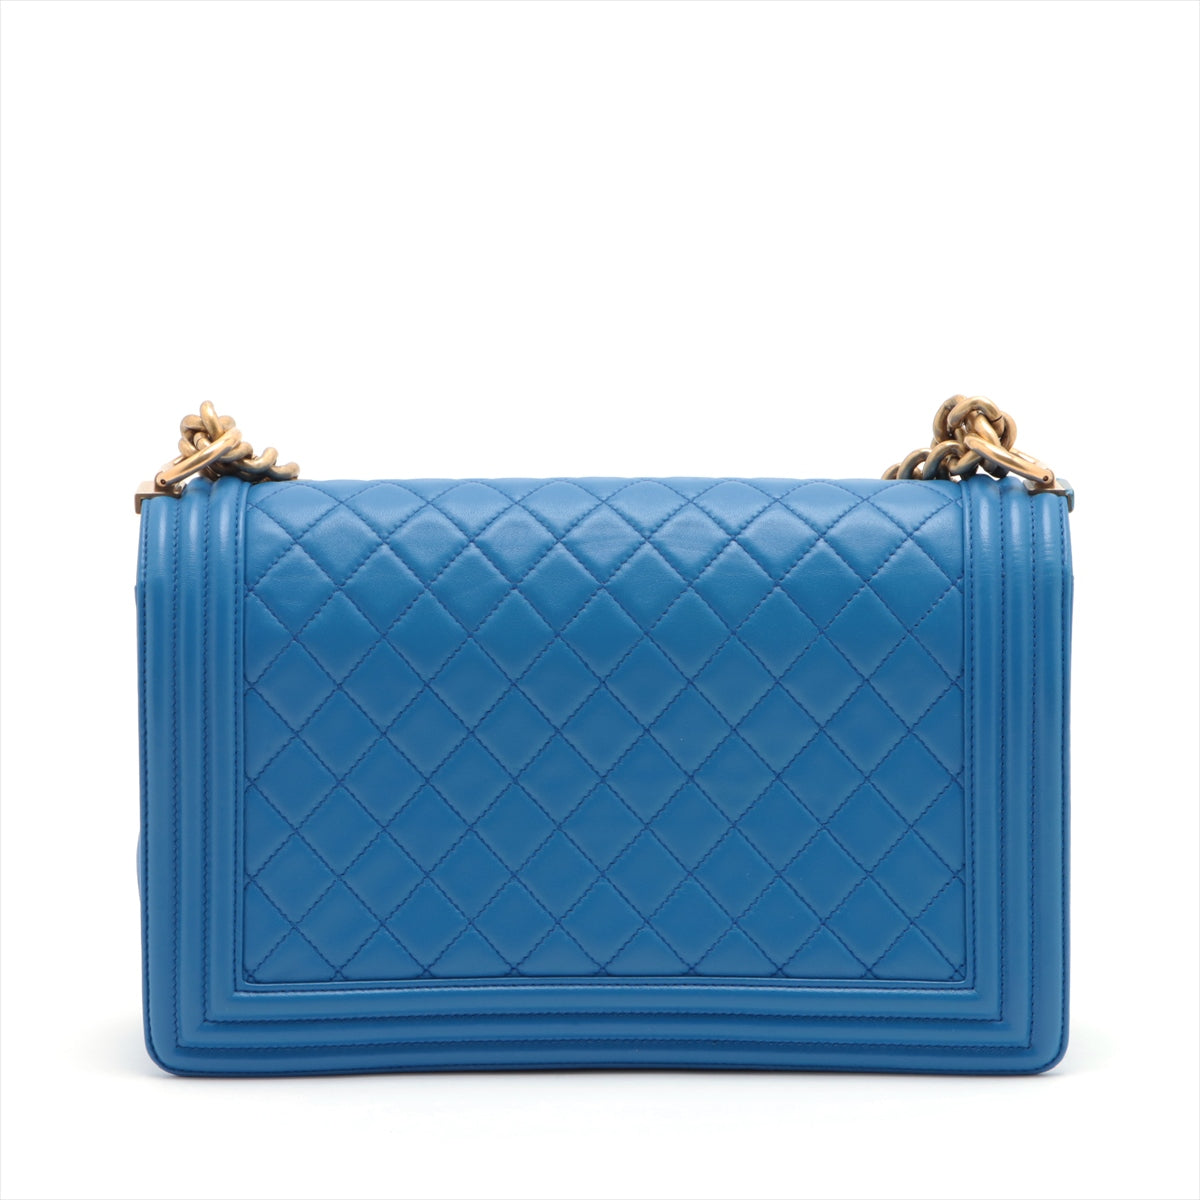 Chanel Boy Chanel Lambskin Single flap single chain bag Blue Gold Metal fittings 21XXXXXX